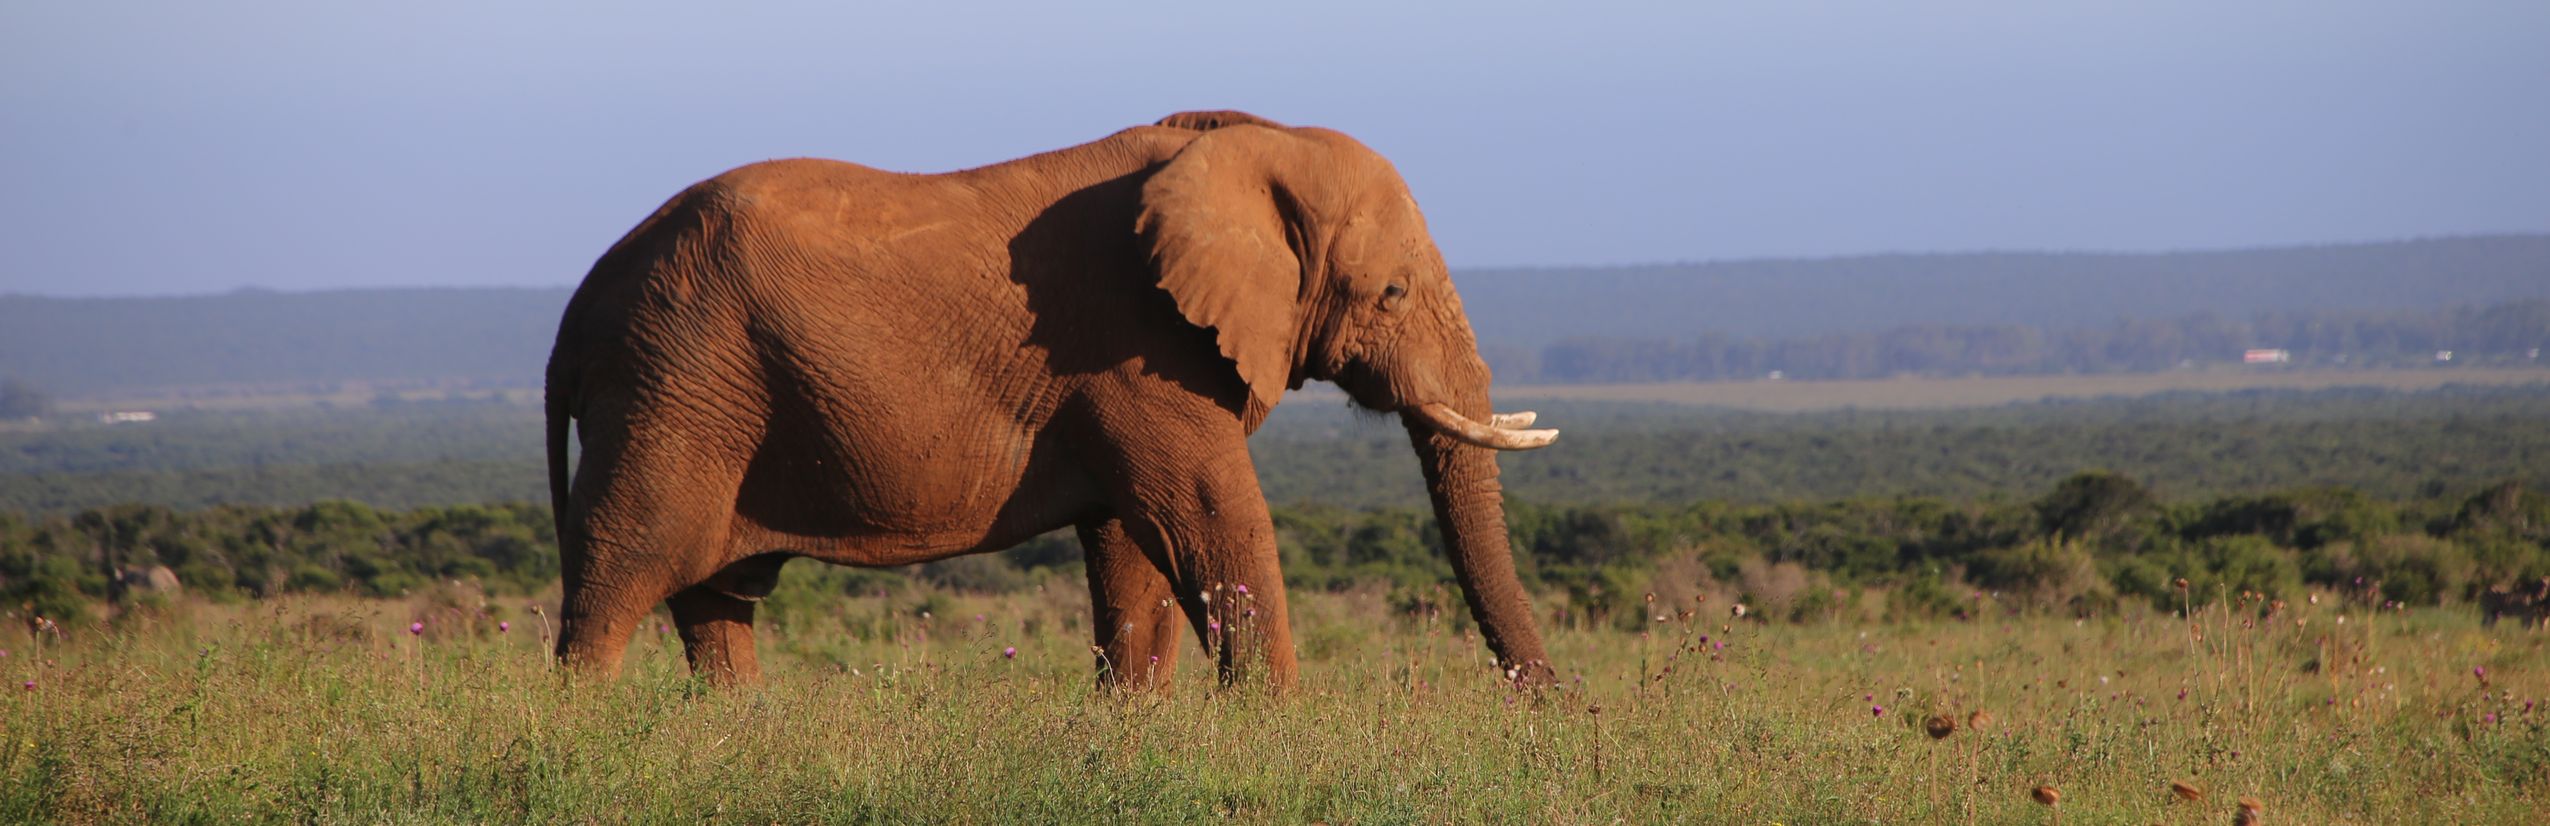 Südafrika Familienreise - Elefant